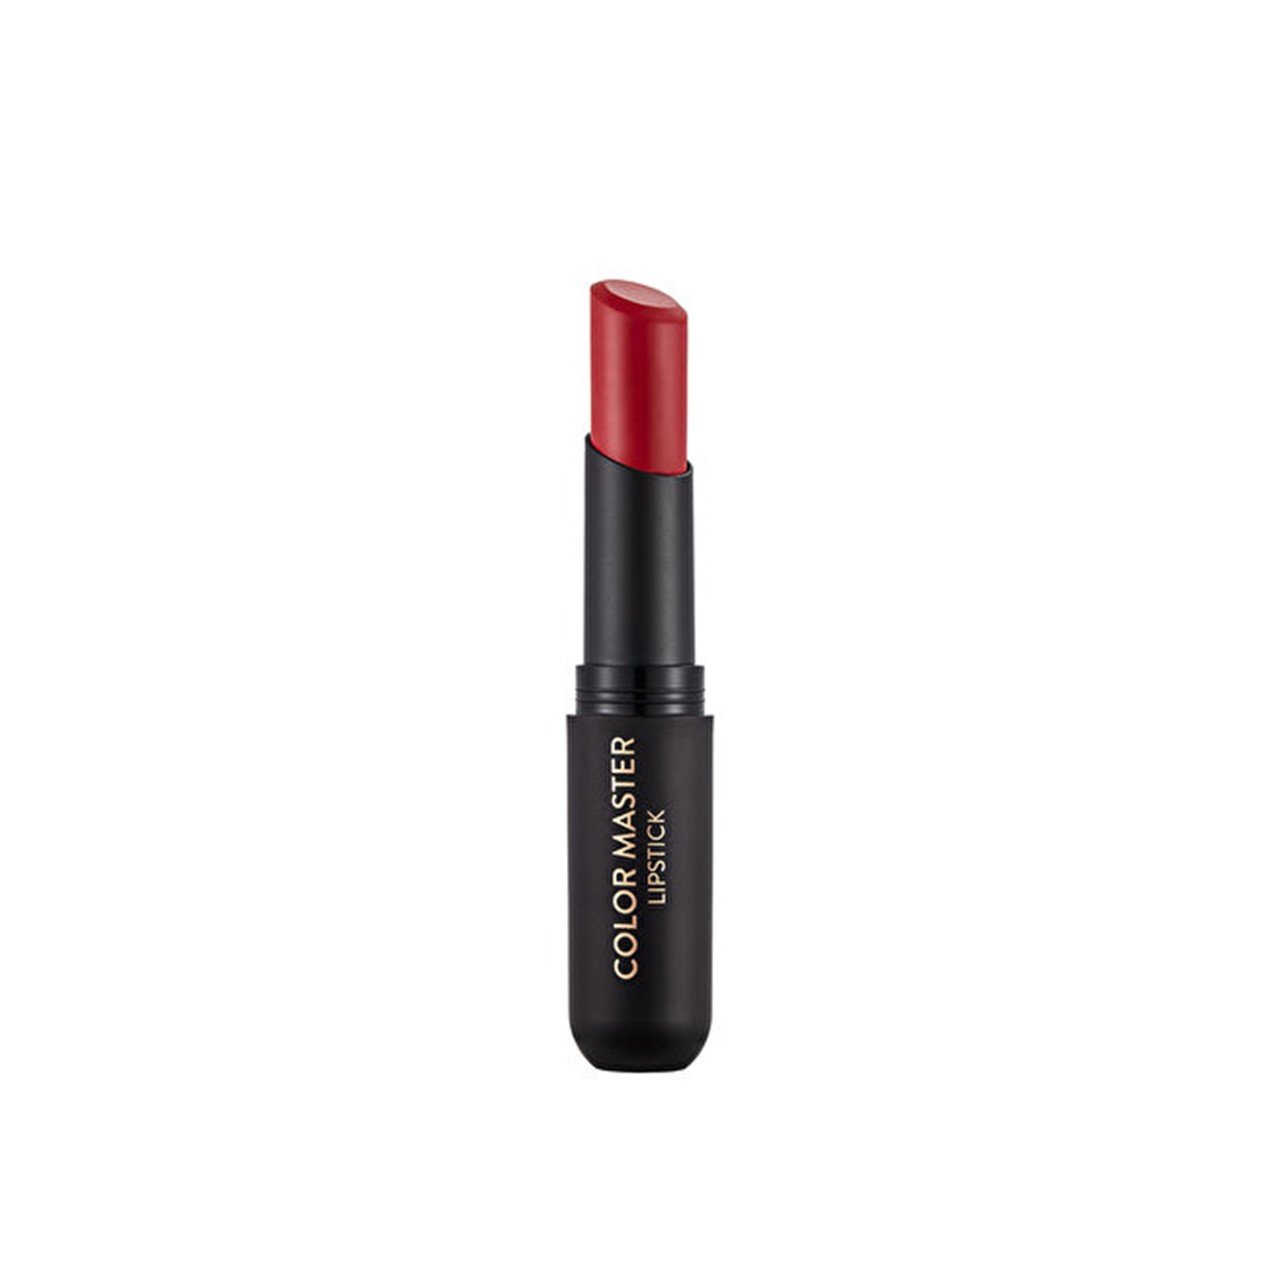 Flormar Color Master Lipstick 14 The Red 3g (0.11oz)